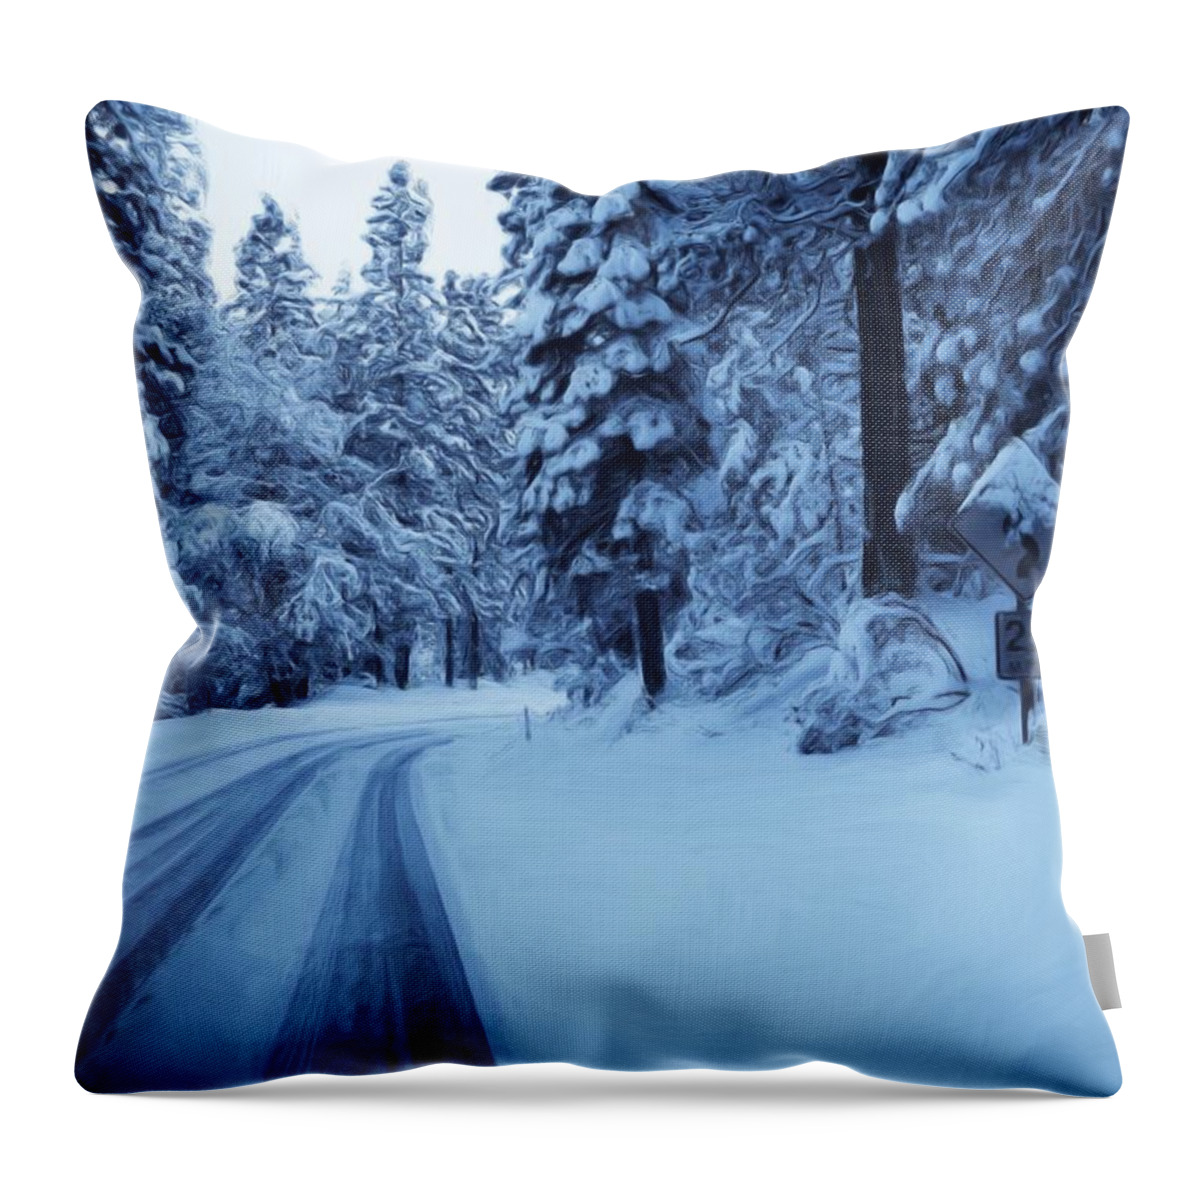 Yosemite Throw Pillow featuring the photograph Through The Snow by Heidi Smith